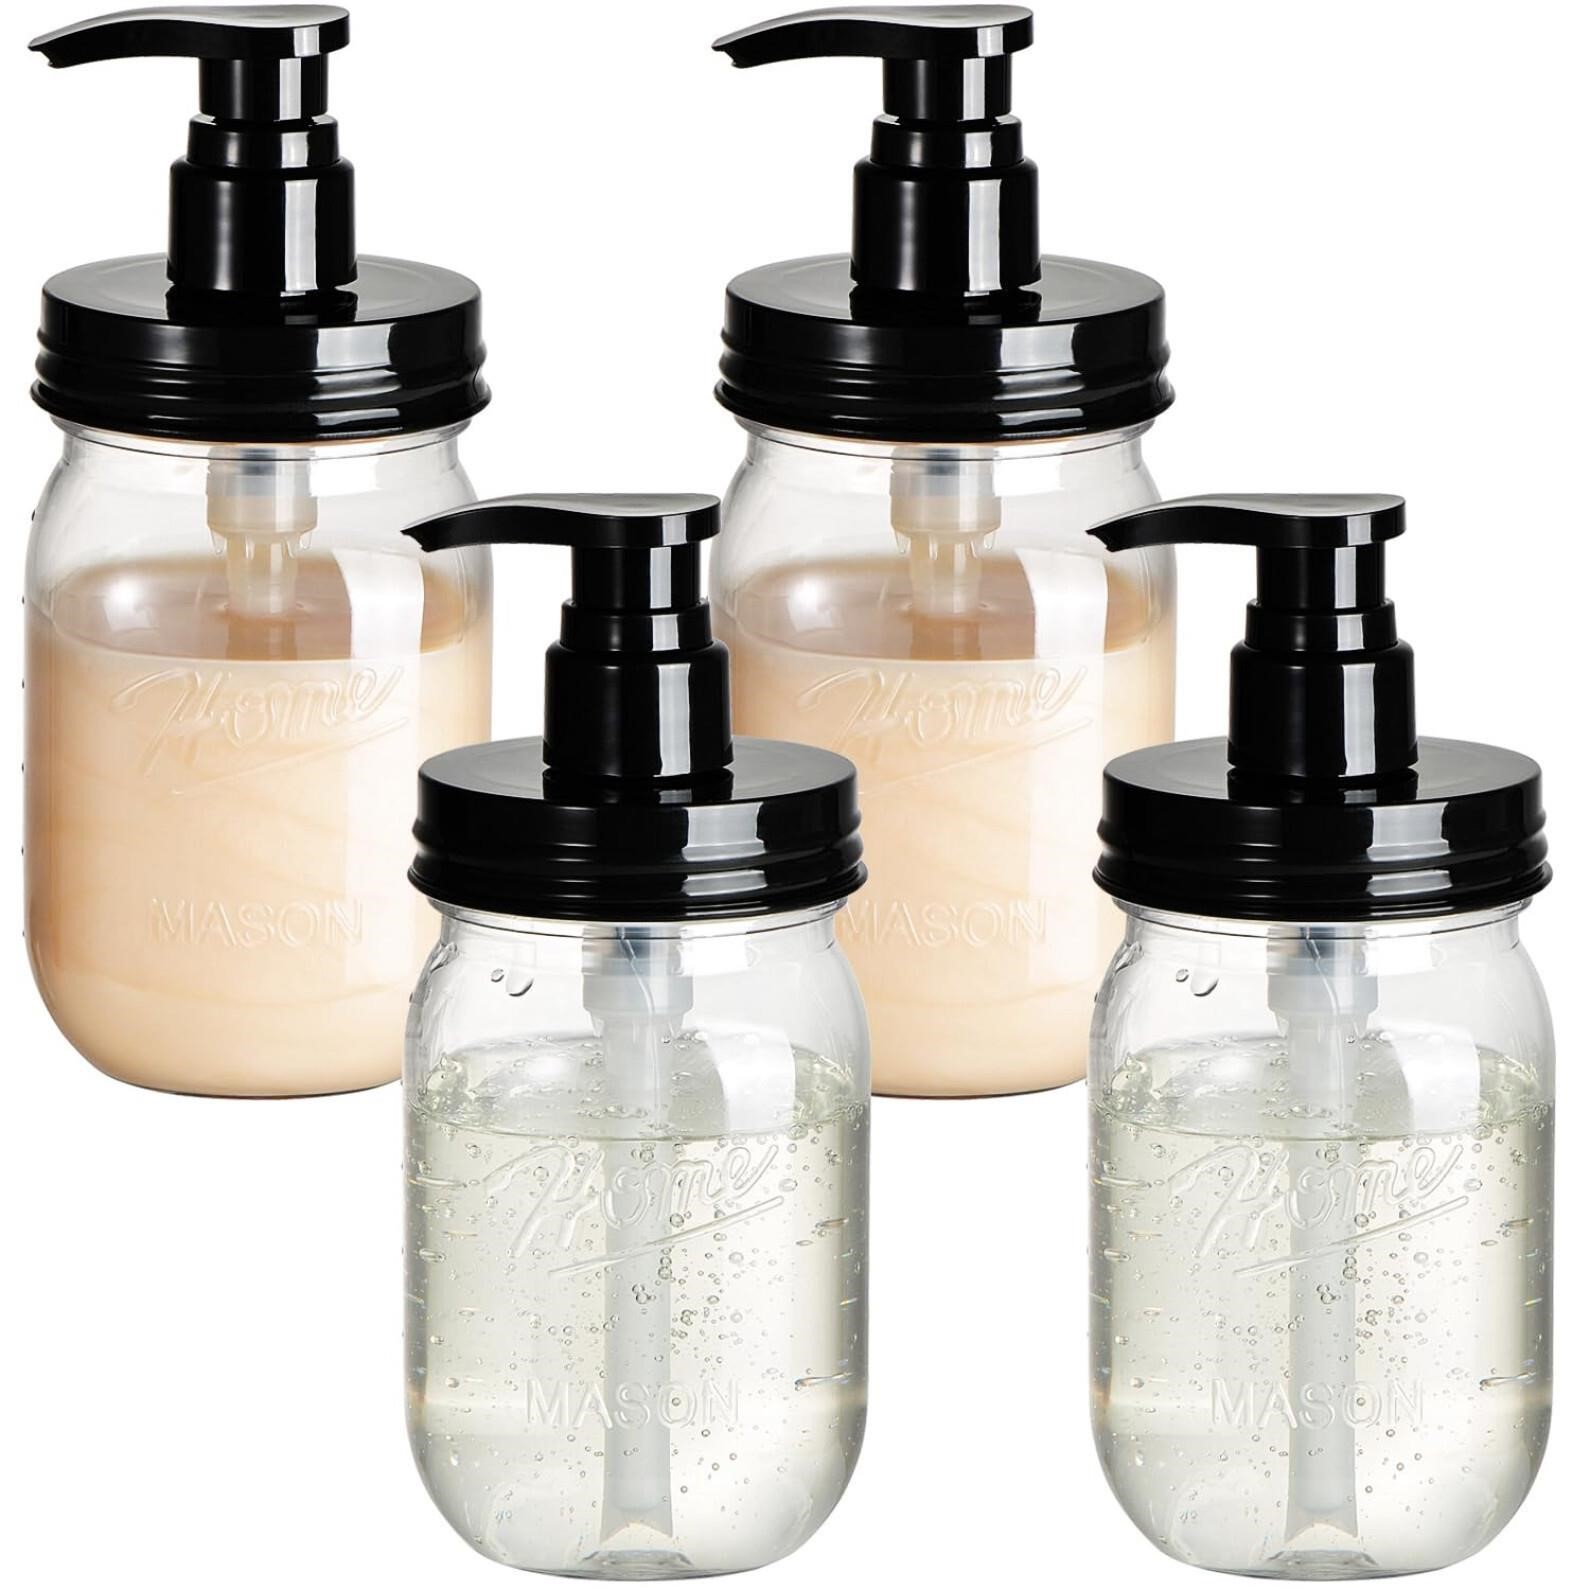 Amolliar Plastic Mason Jar Soap Dispenser with Pum